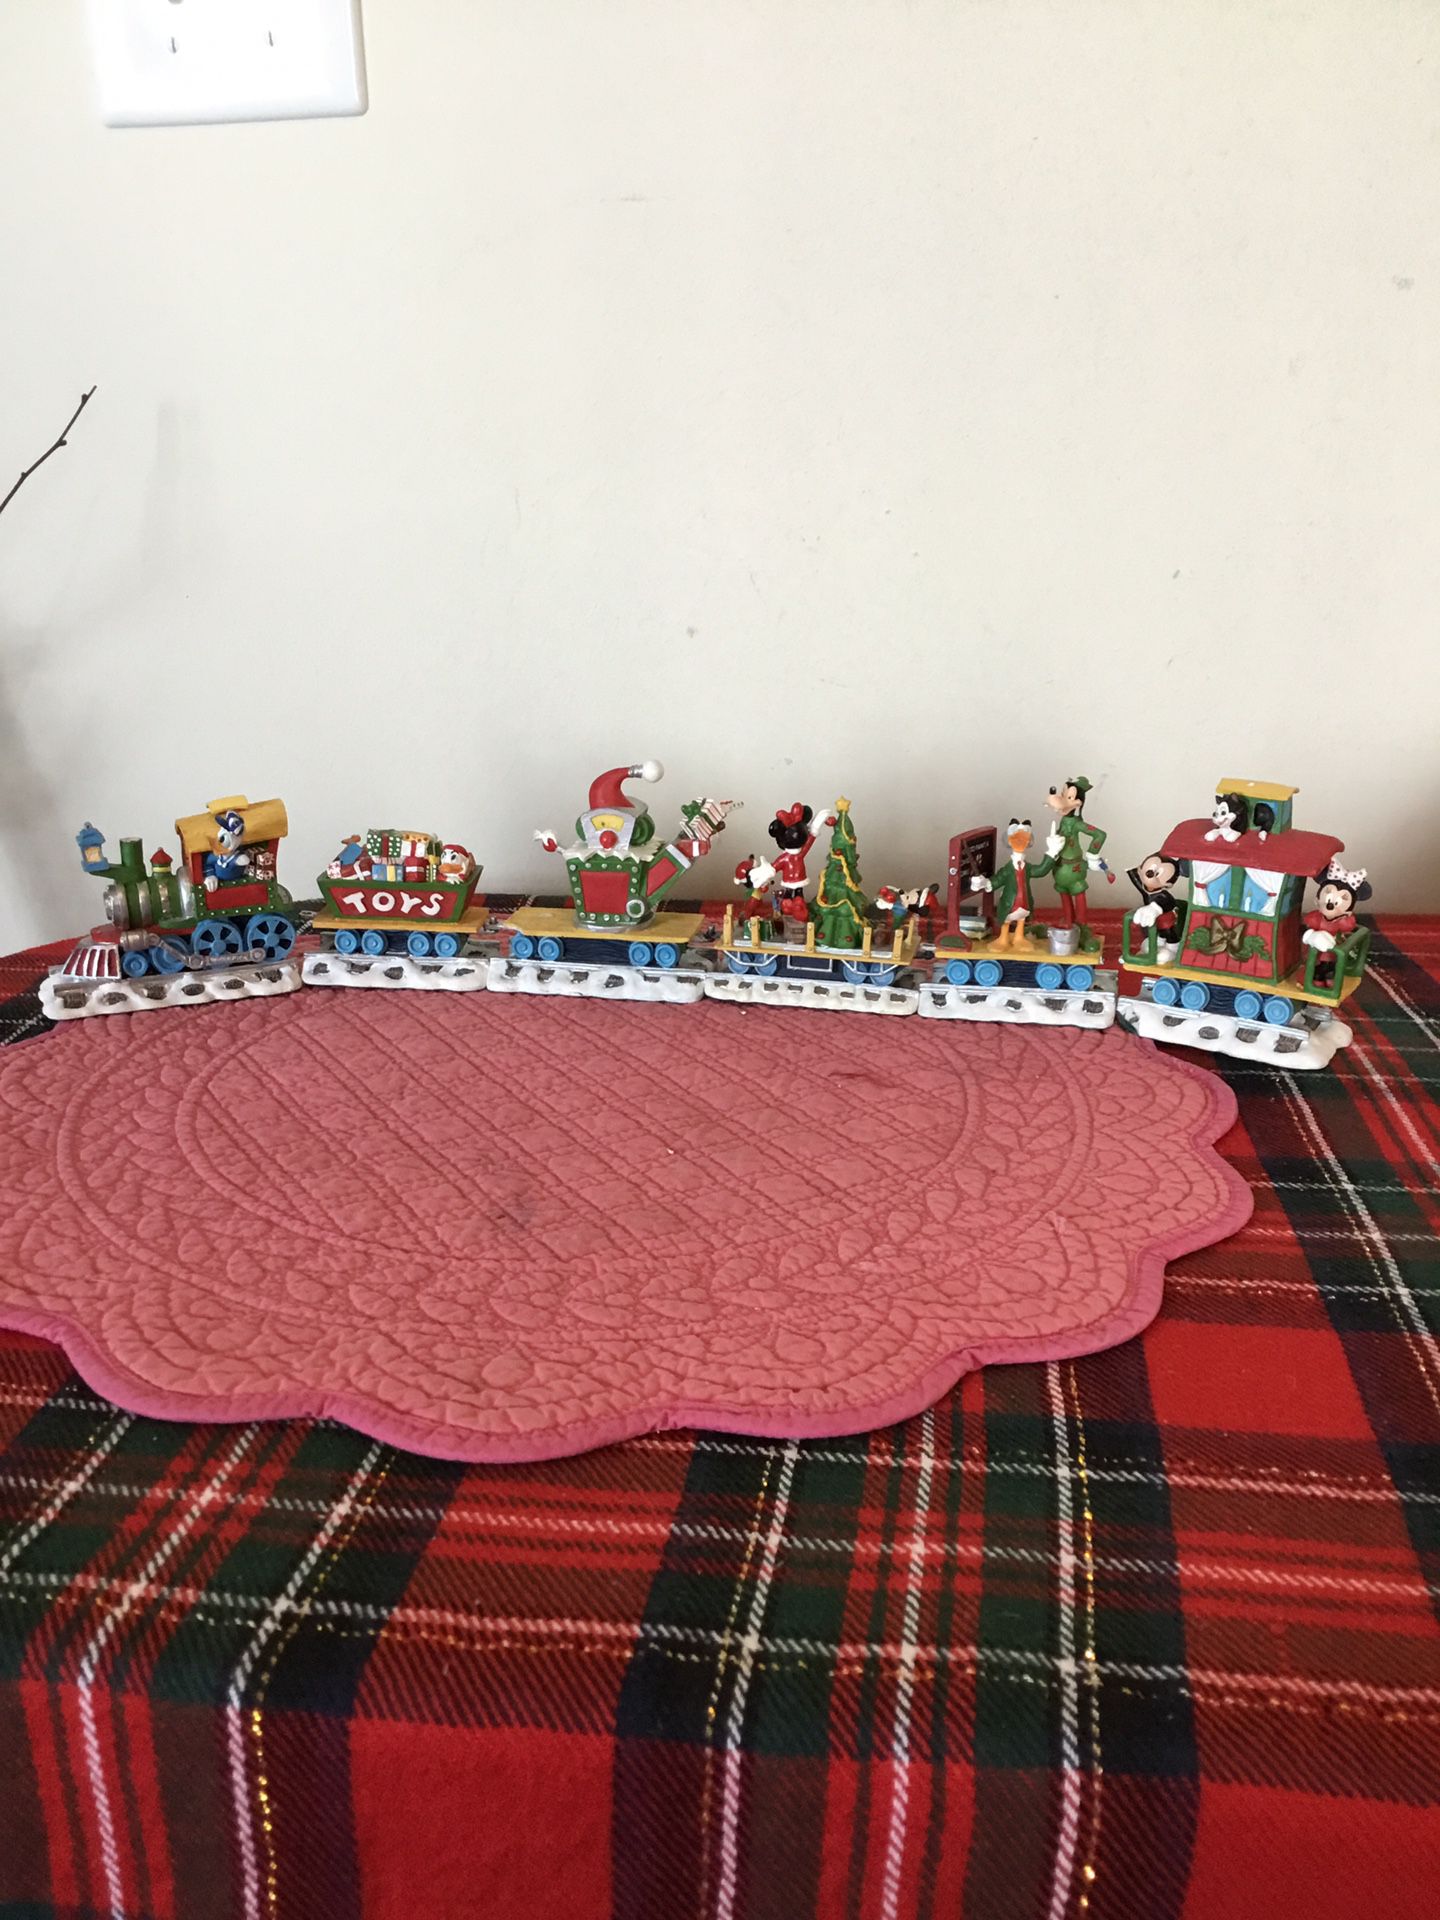 Danbury Mint Disney Donald’s Christmas Train Christmas Holiday 6 Pieces Train Set